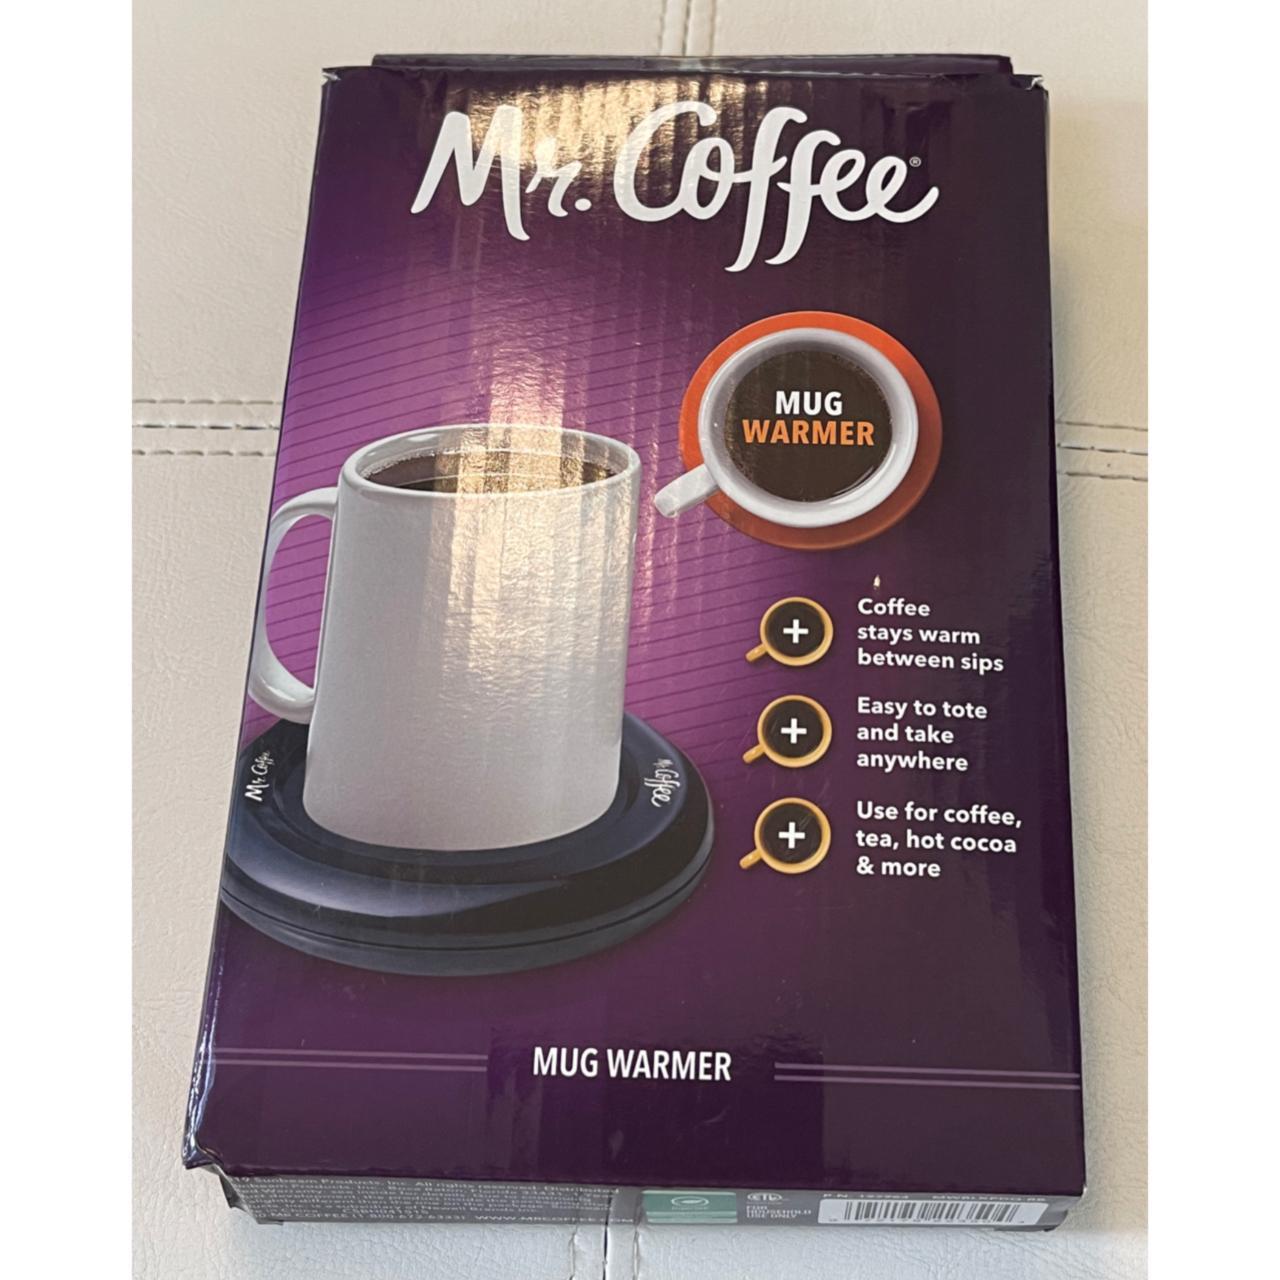 NEW Mr Coffee Mug Warmer New in Box. The stock - Depop